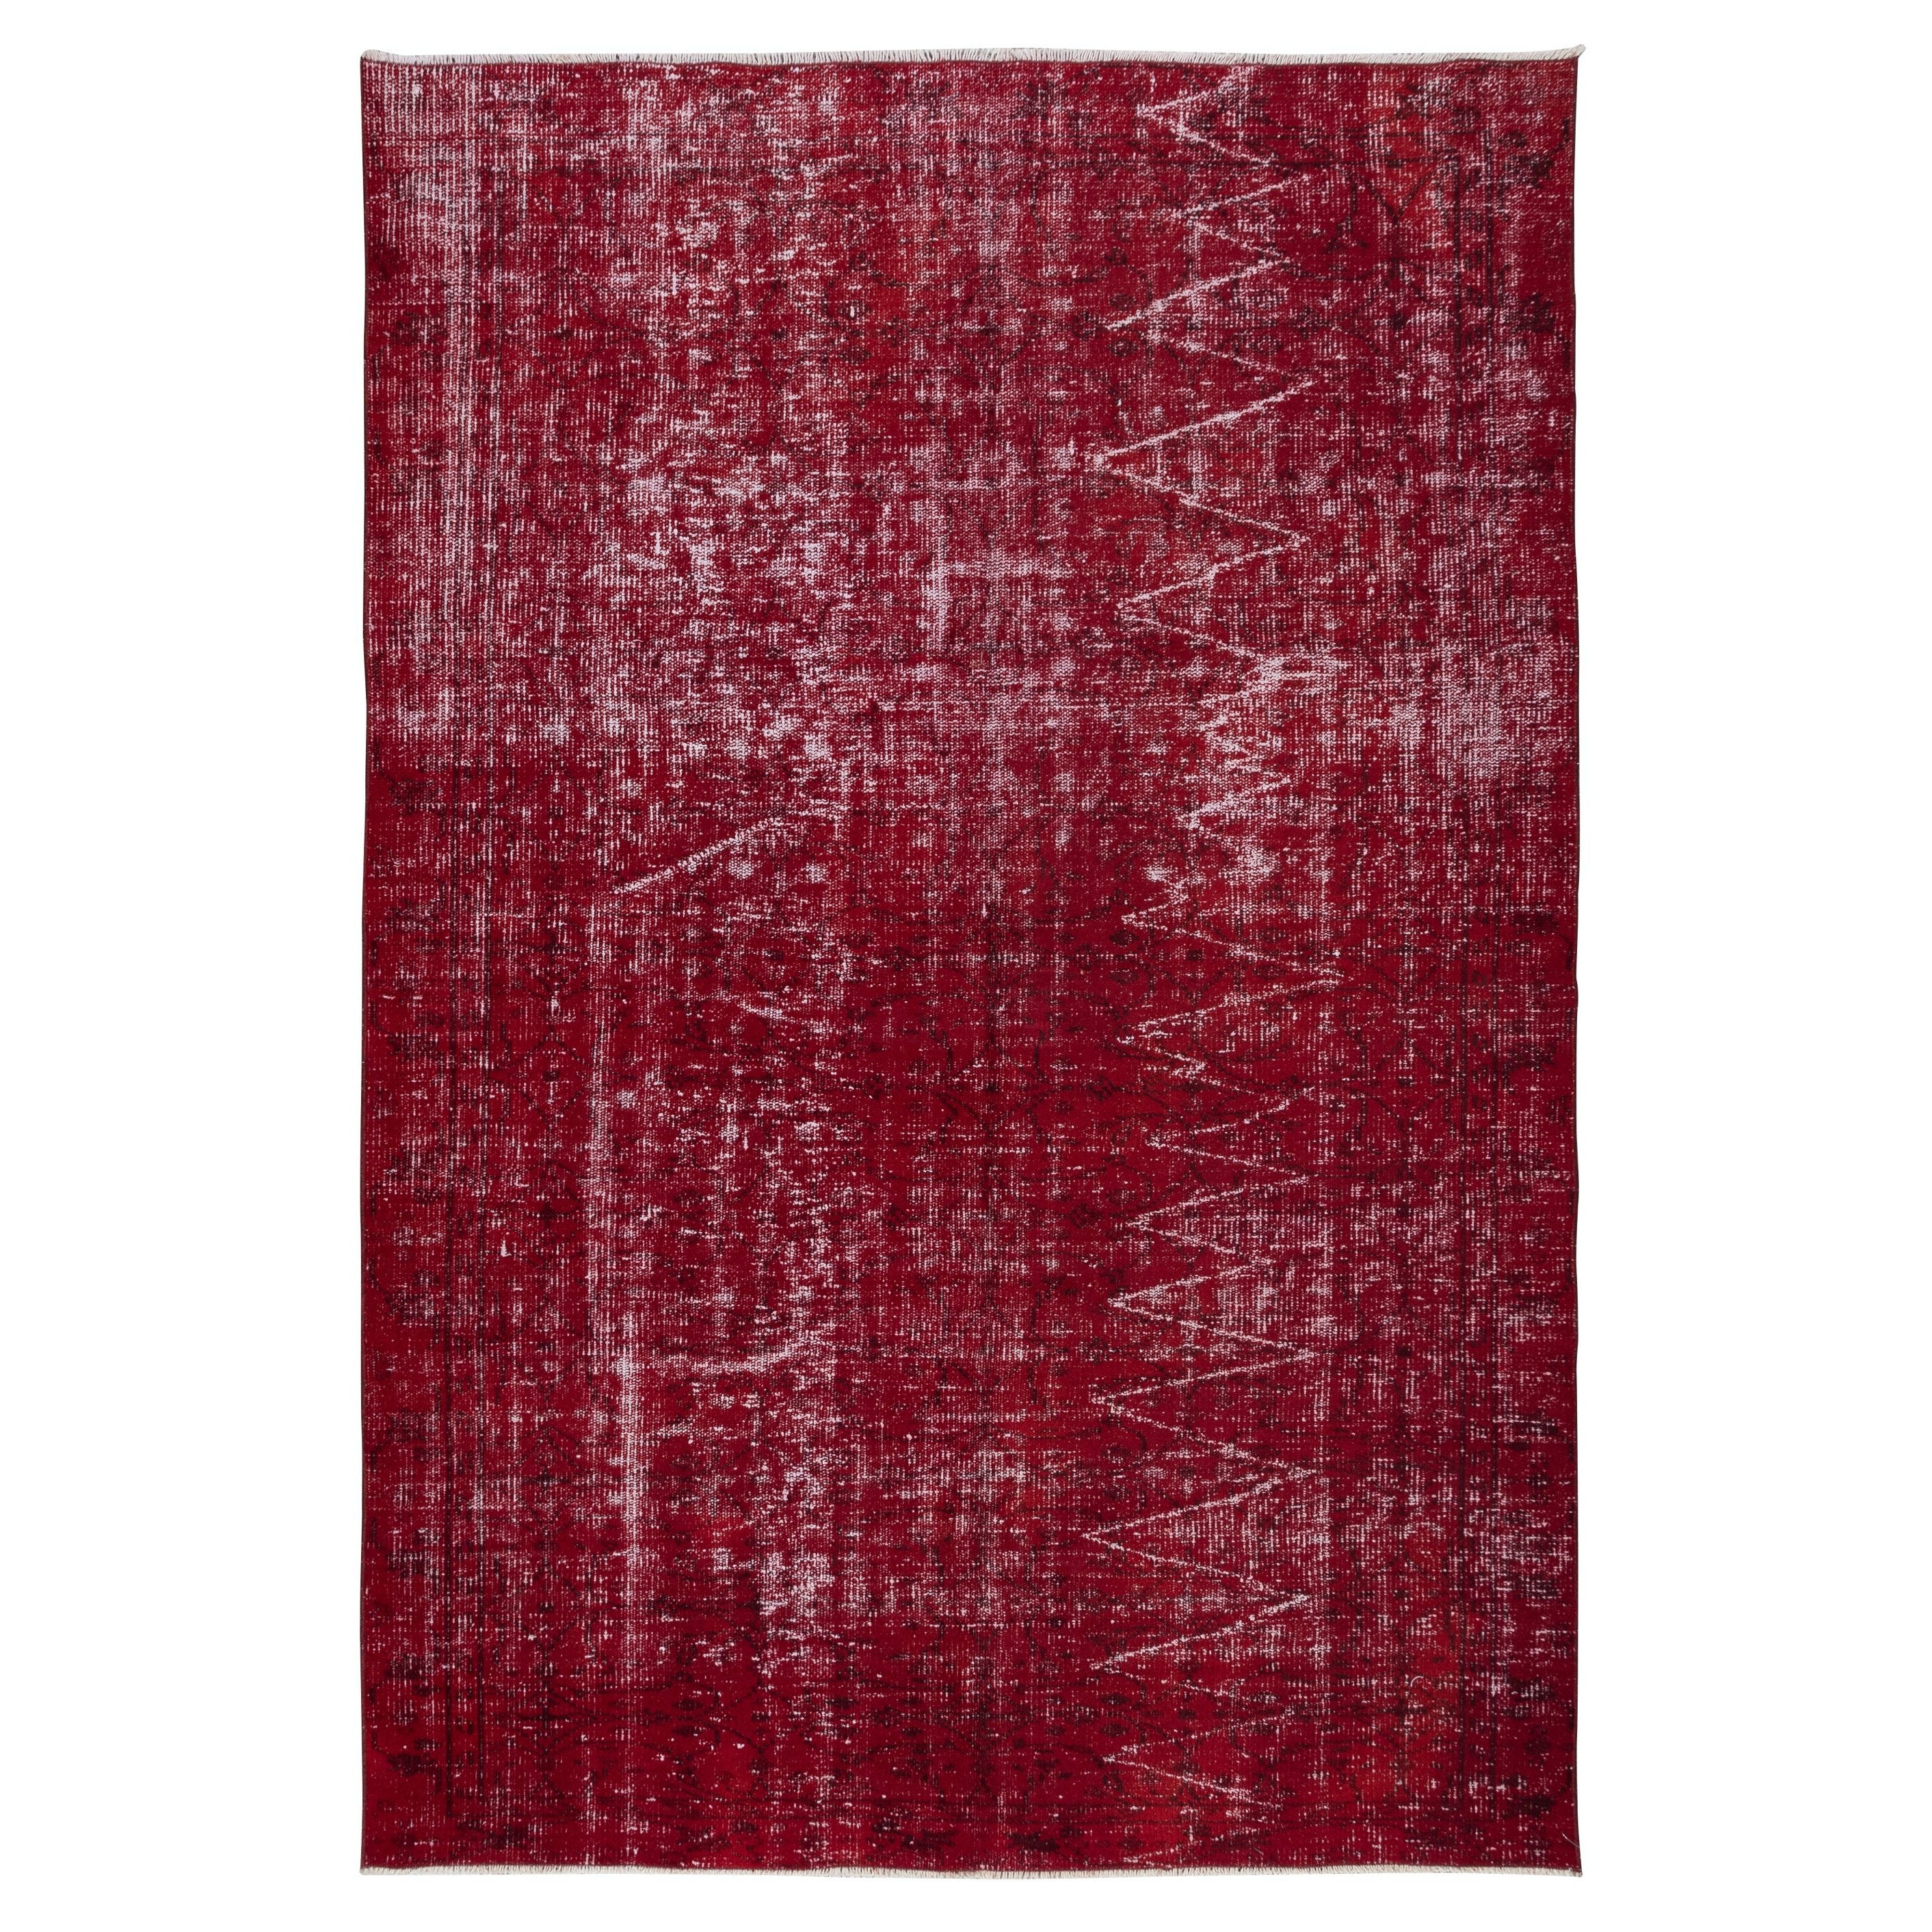 6x9 Ft Modern & Contemporary Rug in Dark Red, Handmade Turkish Wool Carpet